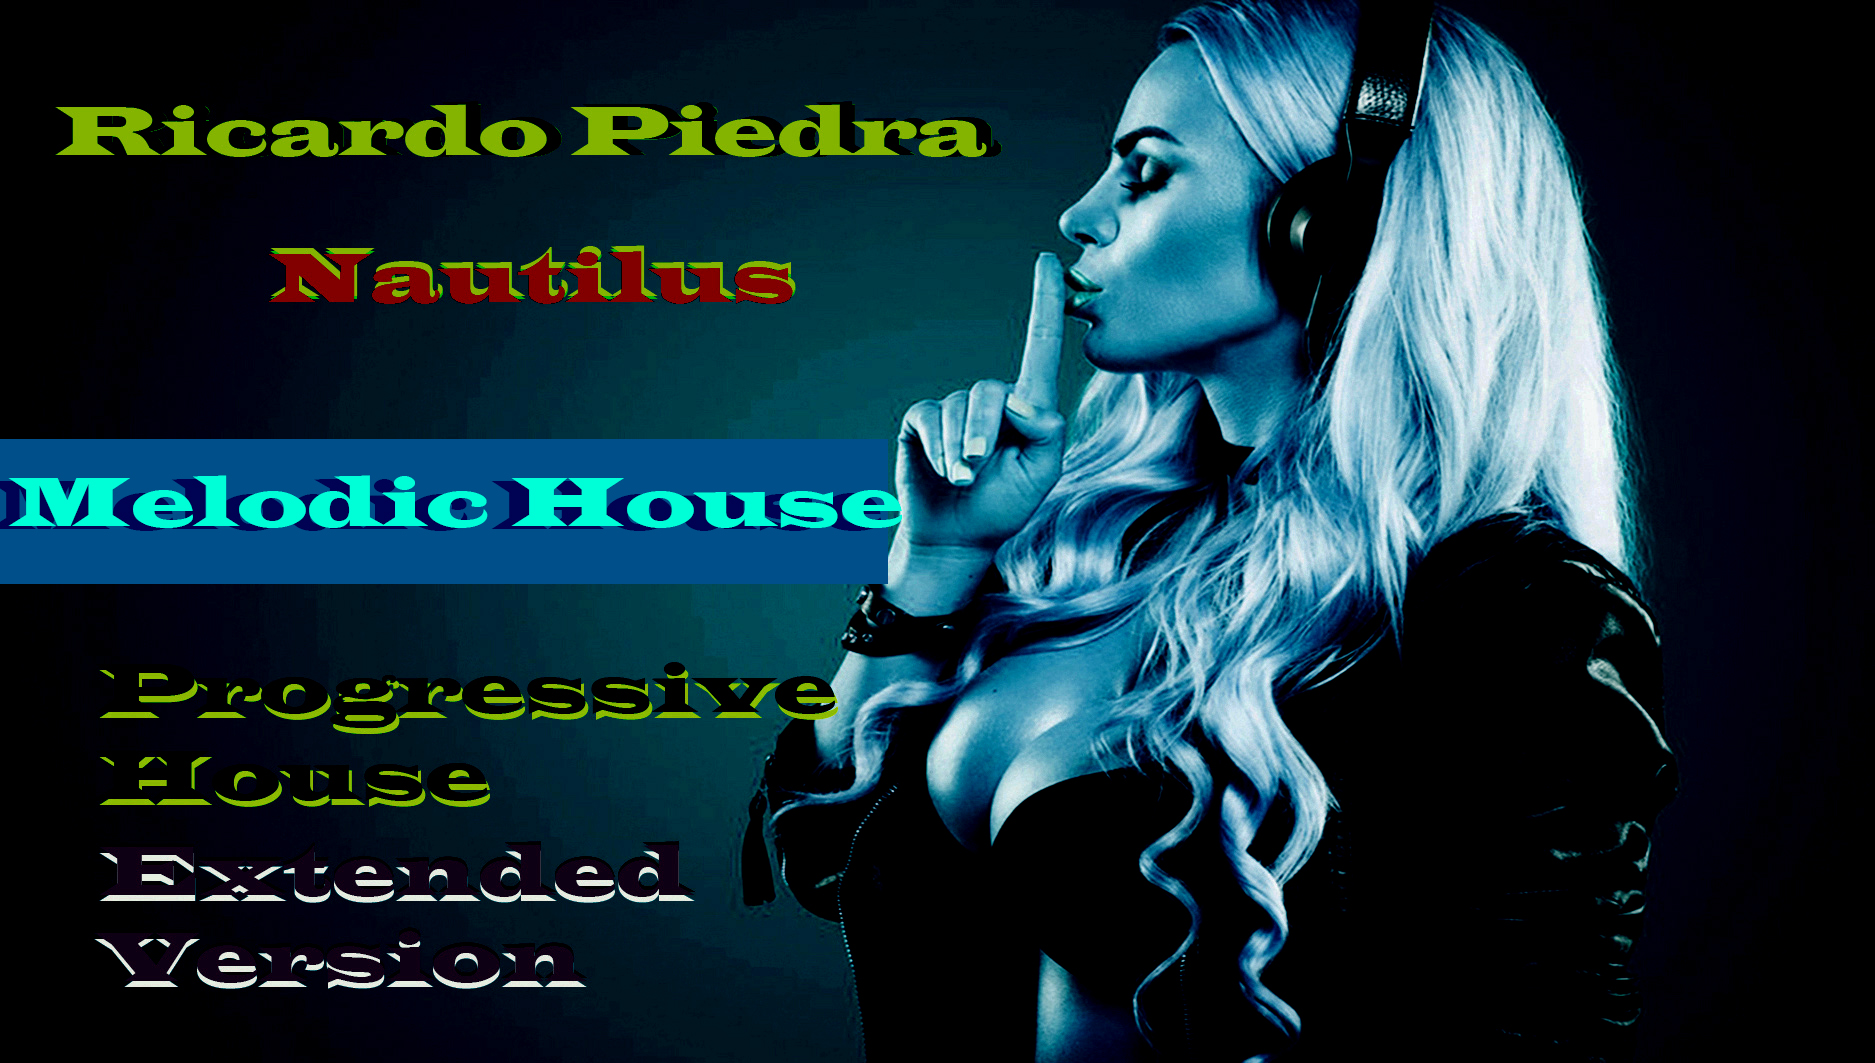 Ricardo Piedra - Nautilus (Progressive House,Extended Version) Прогрессив хаус, #22 .mp4